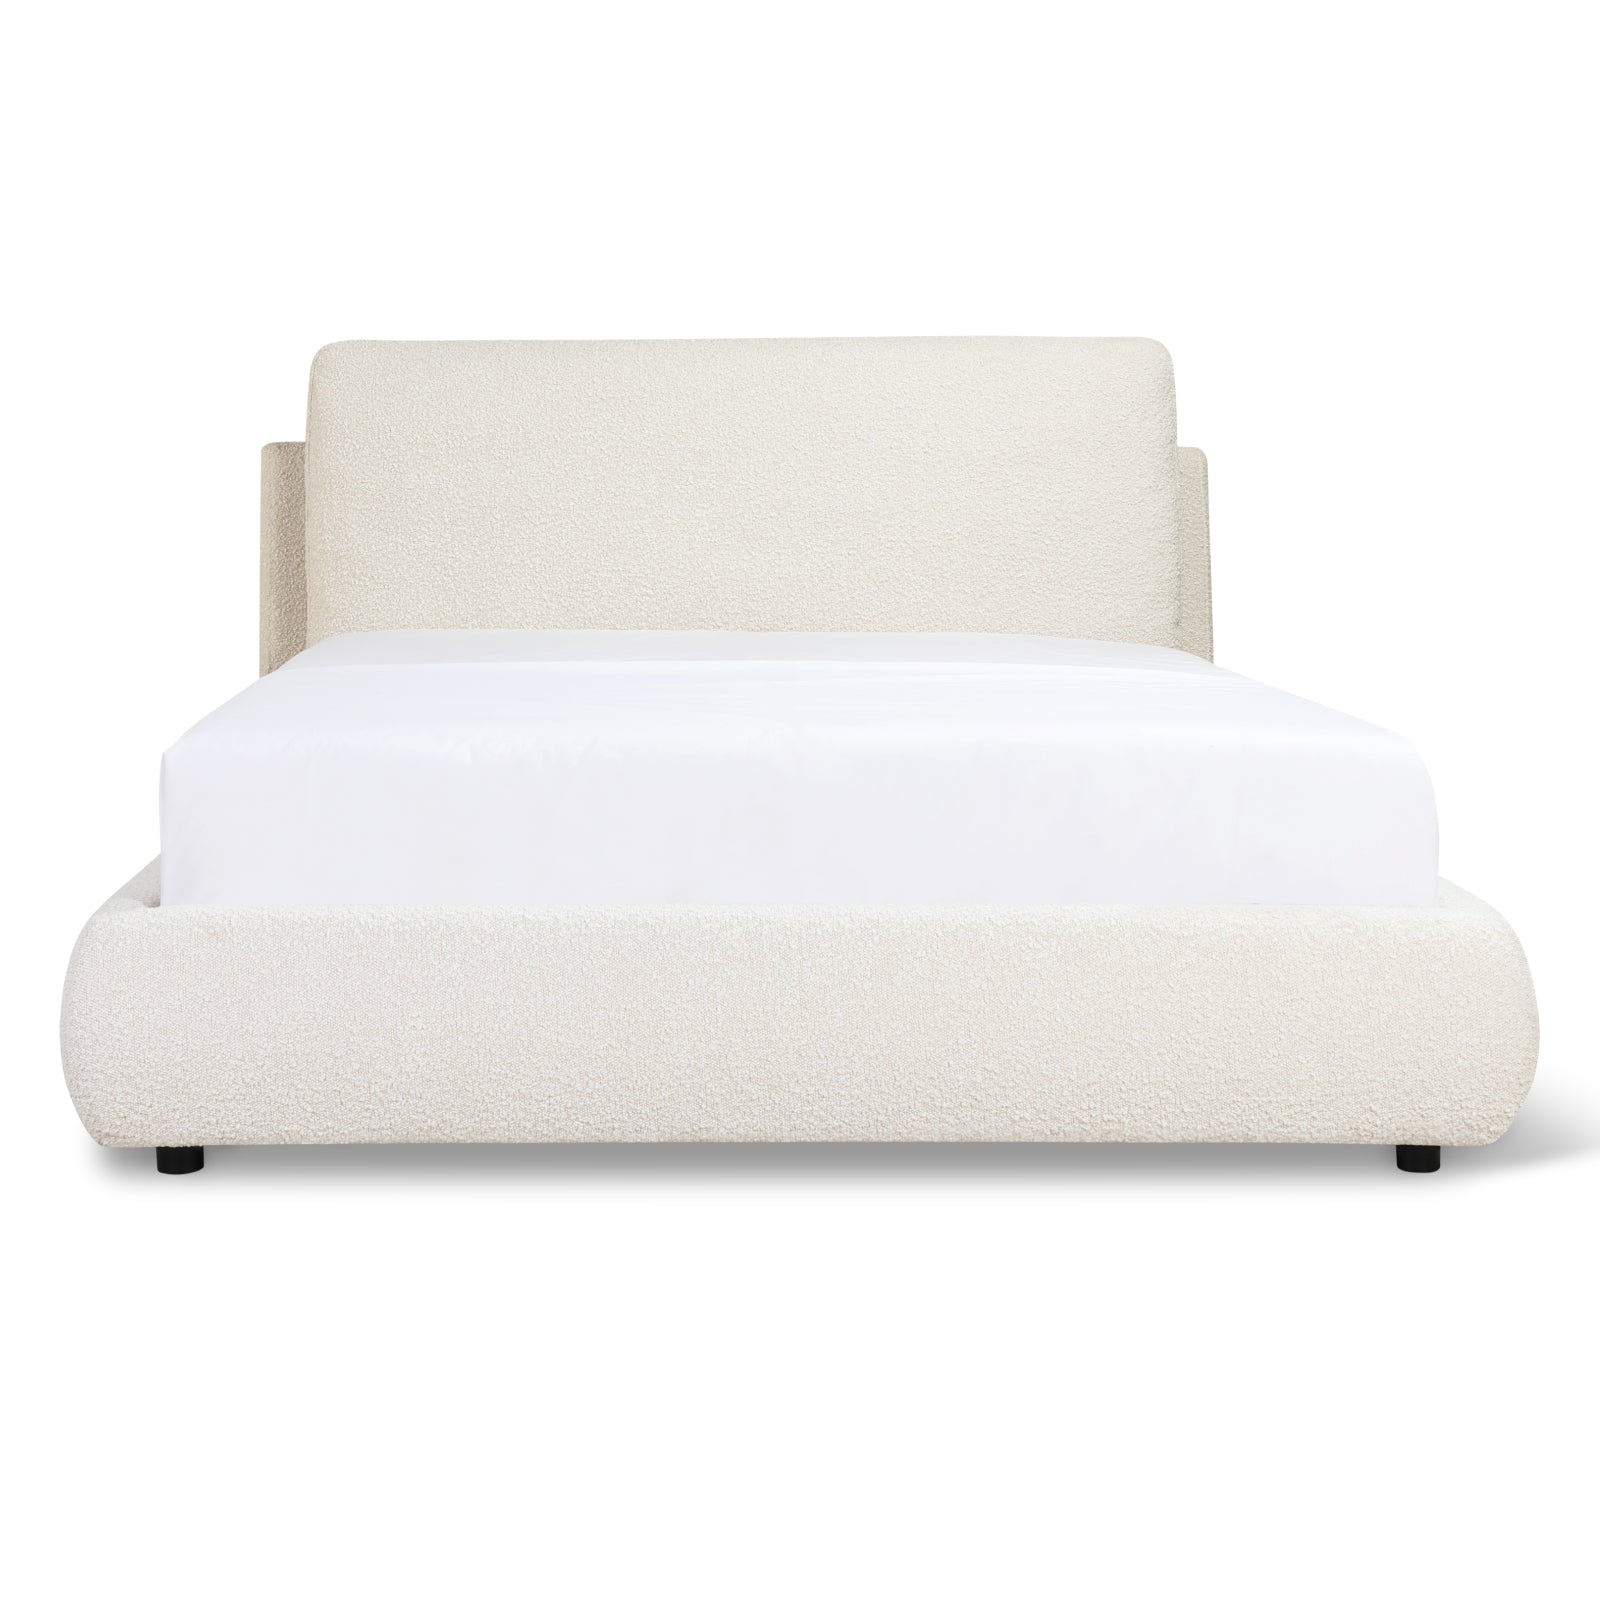 Cloud Bed, Full, Cream Boucle - Image 9